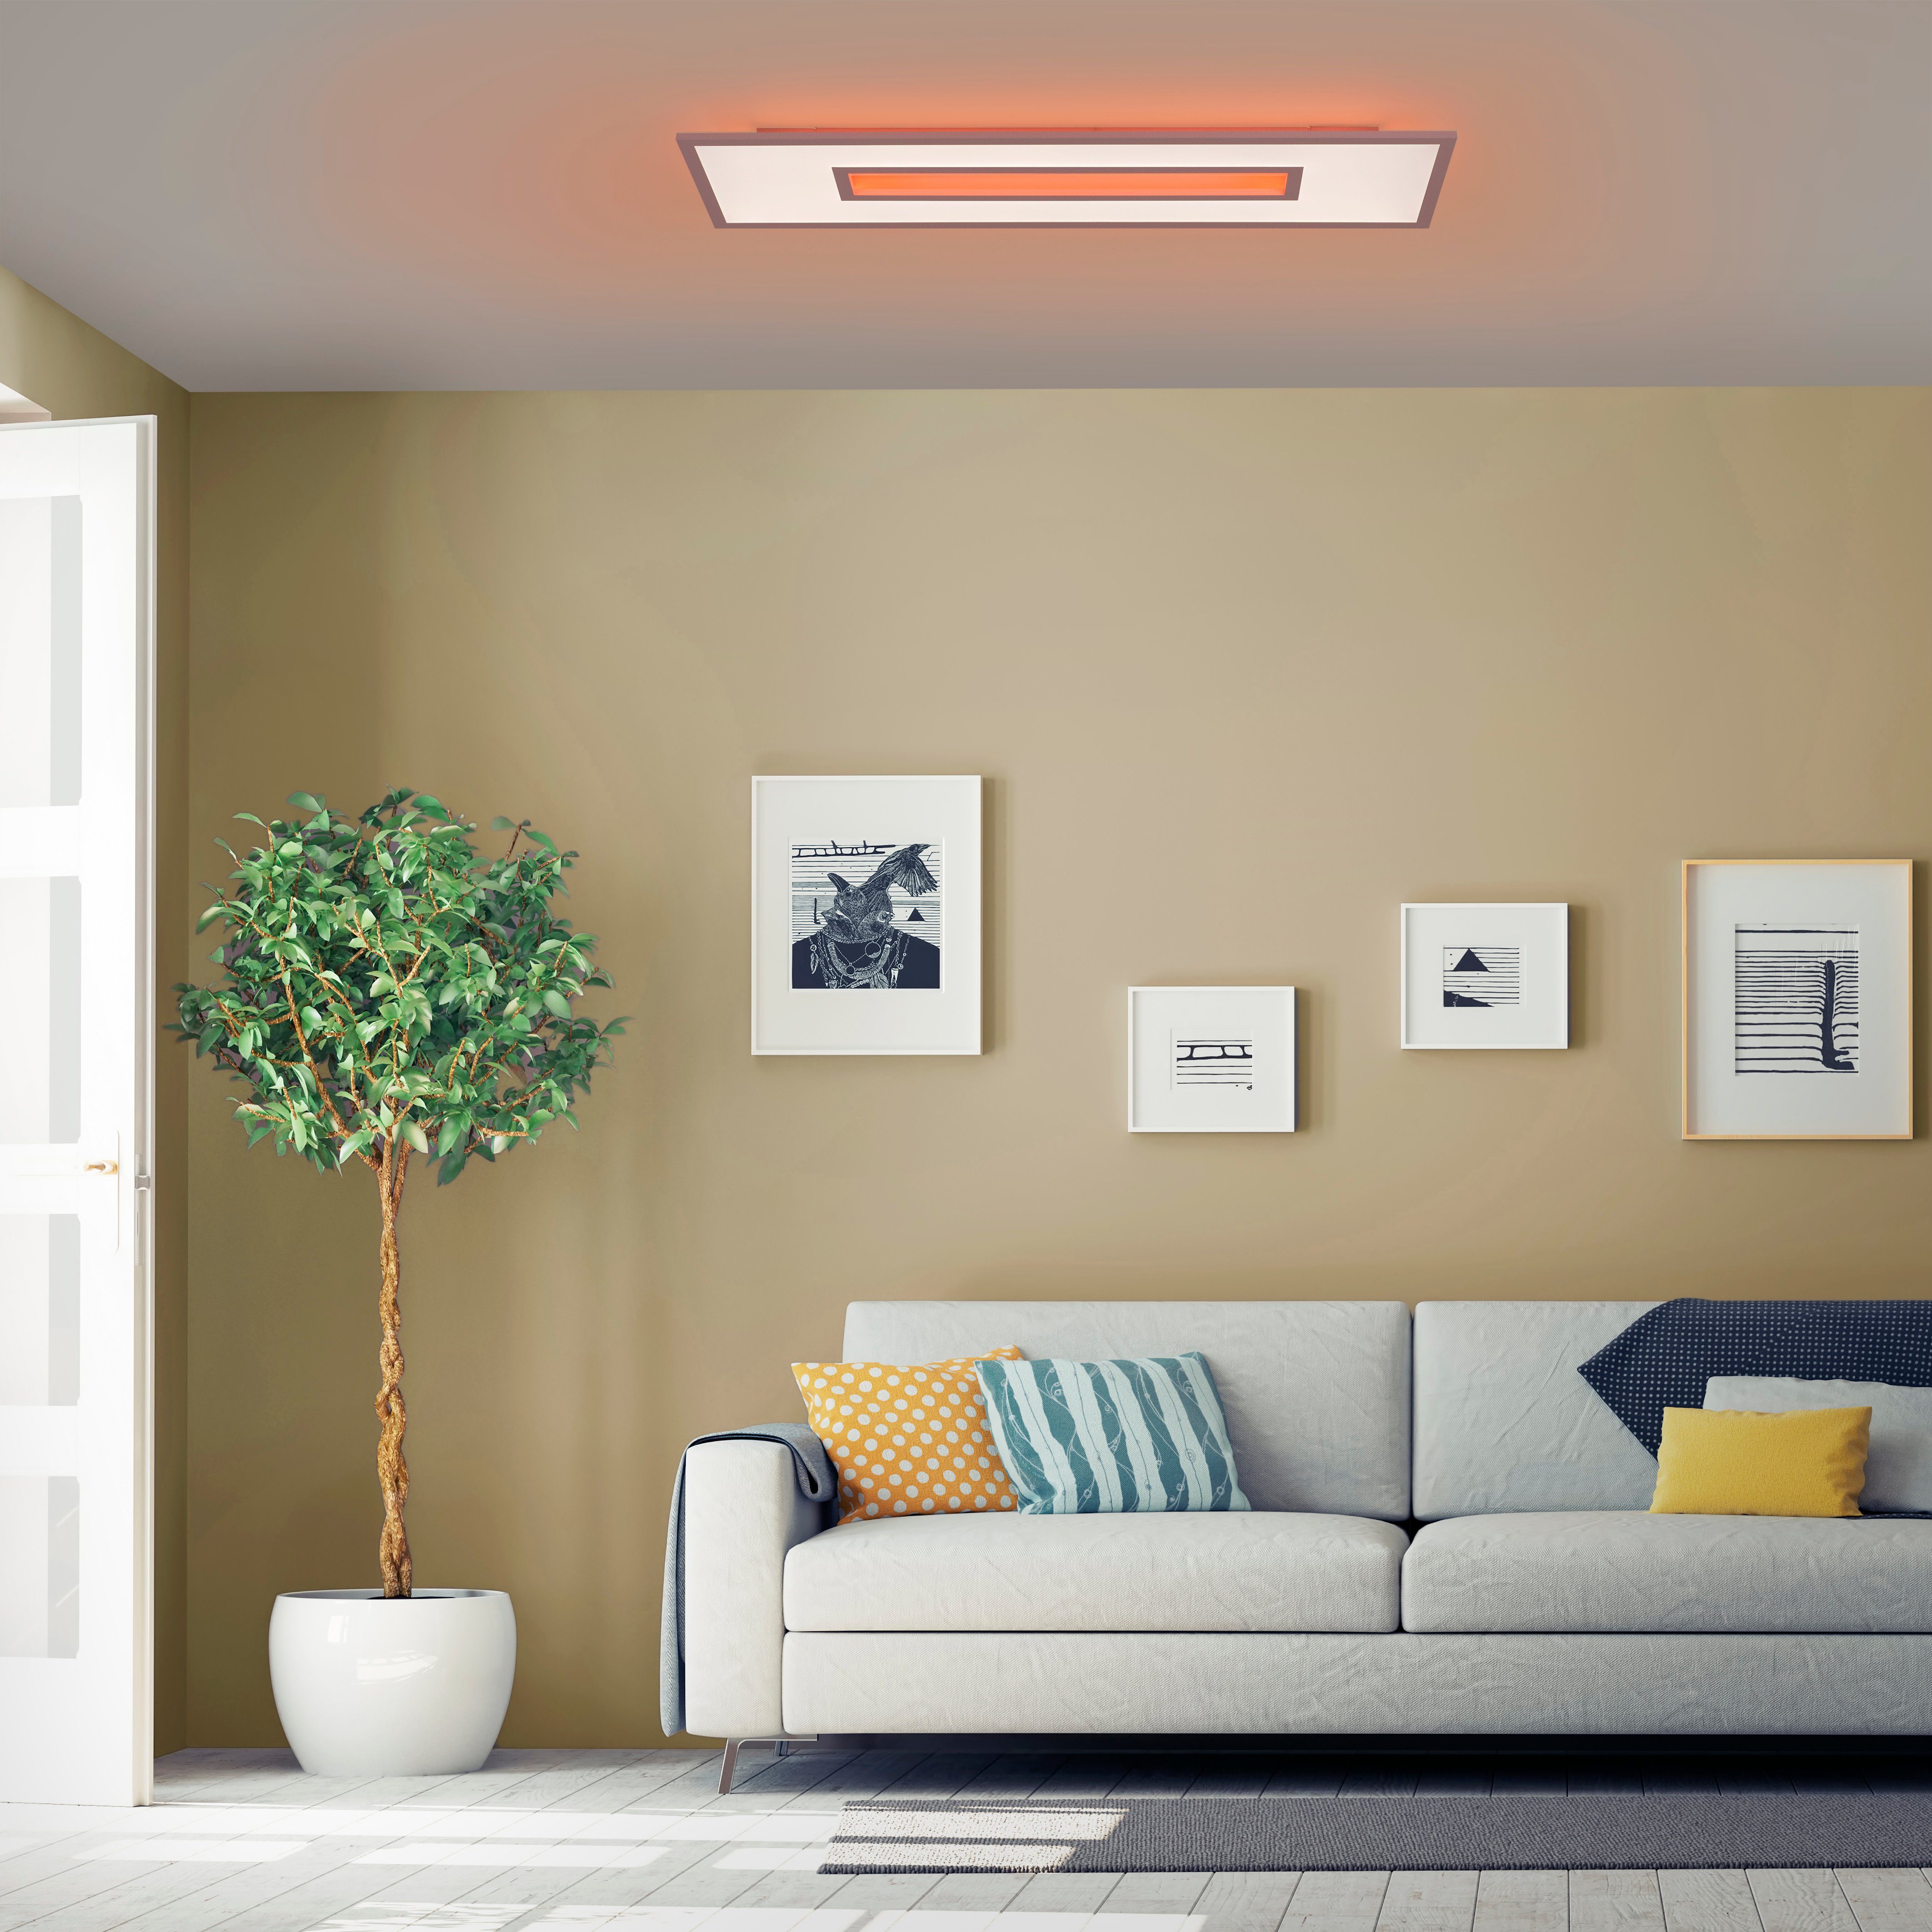 Leuchten Direkt LED warmweiß RECESS, Deckenleuchte Dimmfunktion, - integriert, dimmbar Fernbedienung über fest kaltweiß, LED